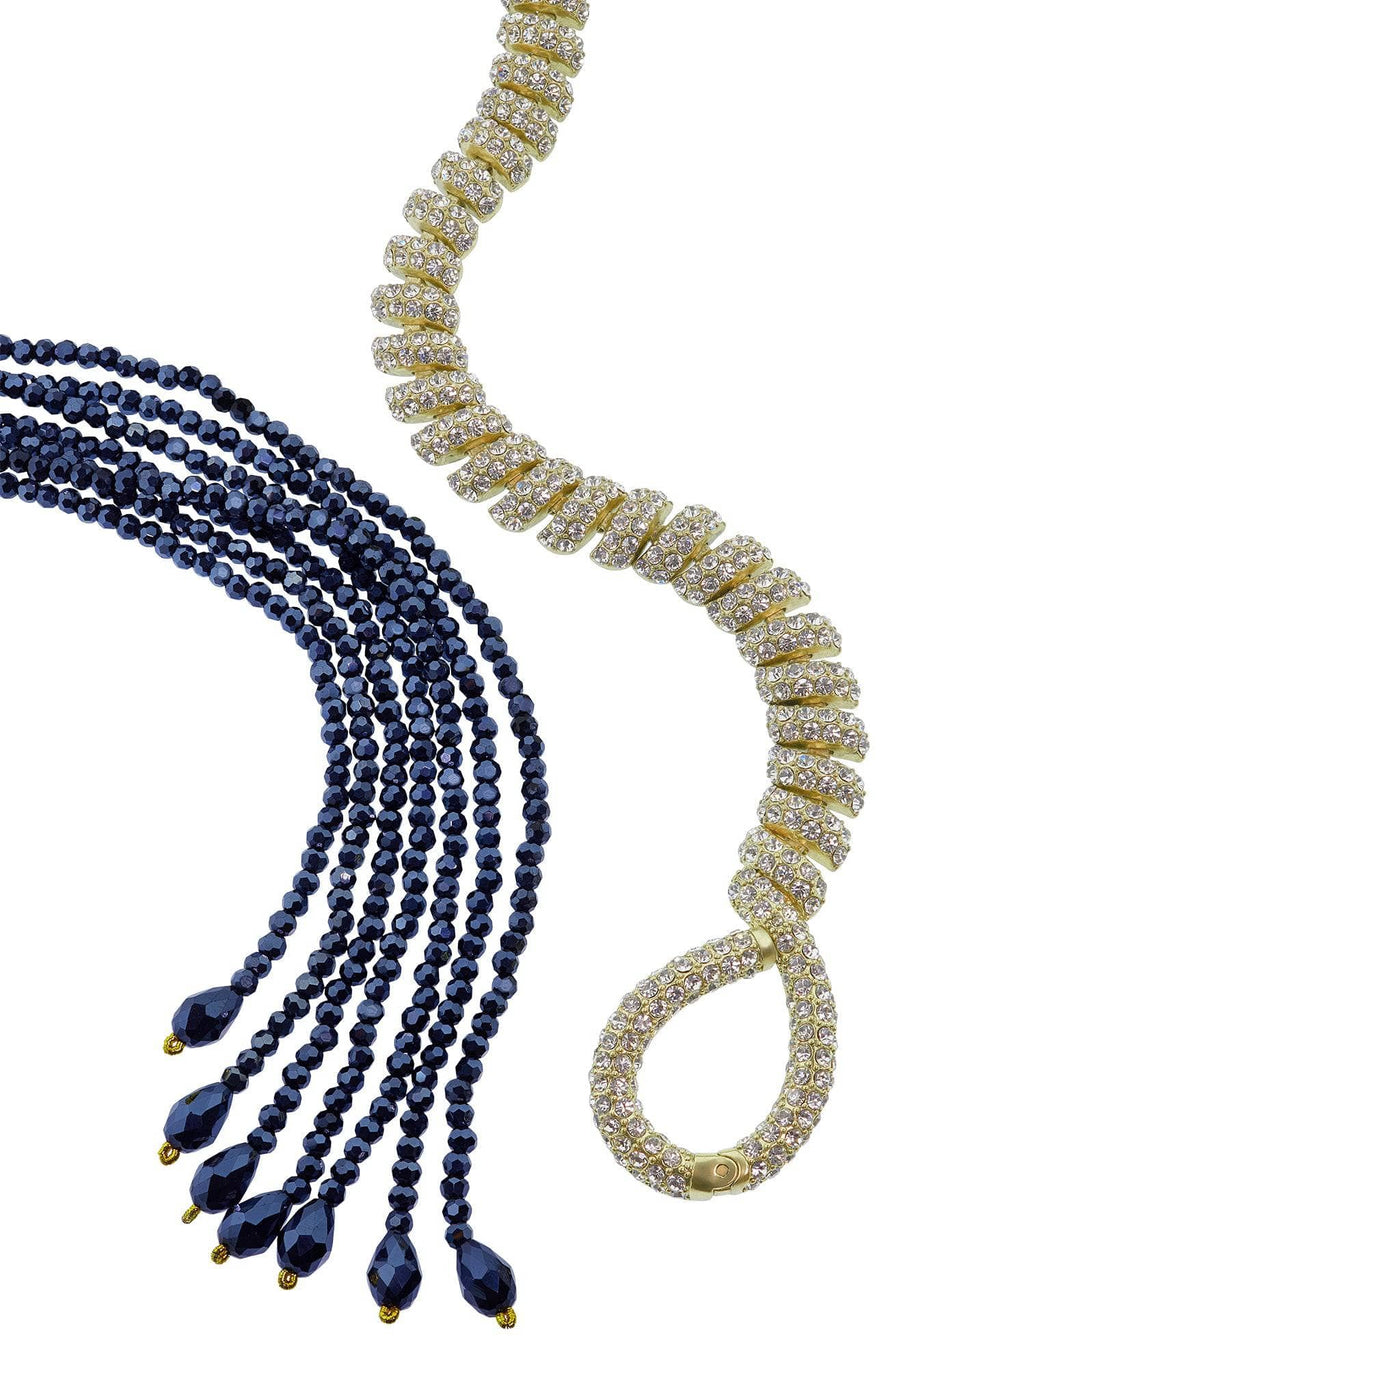 Heidi Daus®"Sleek and Sophisticated" Crystal & Beaded Necklace